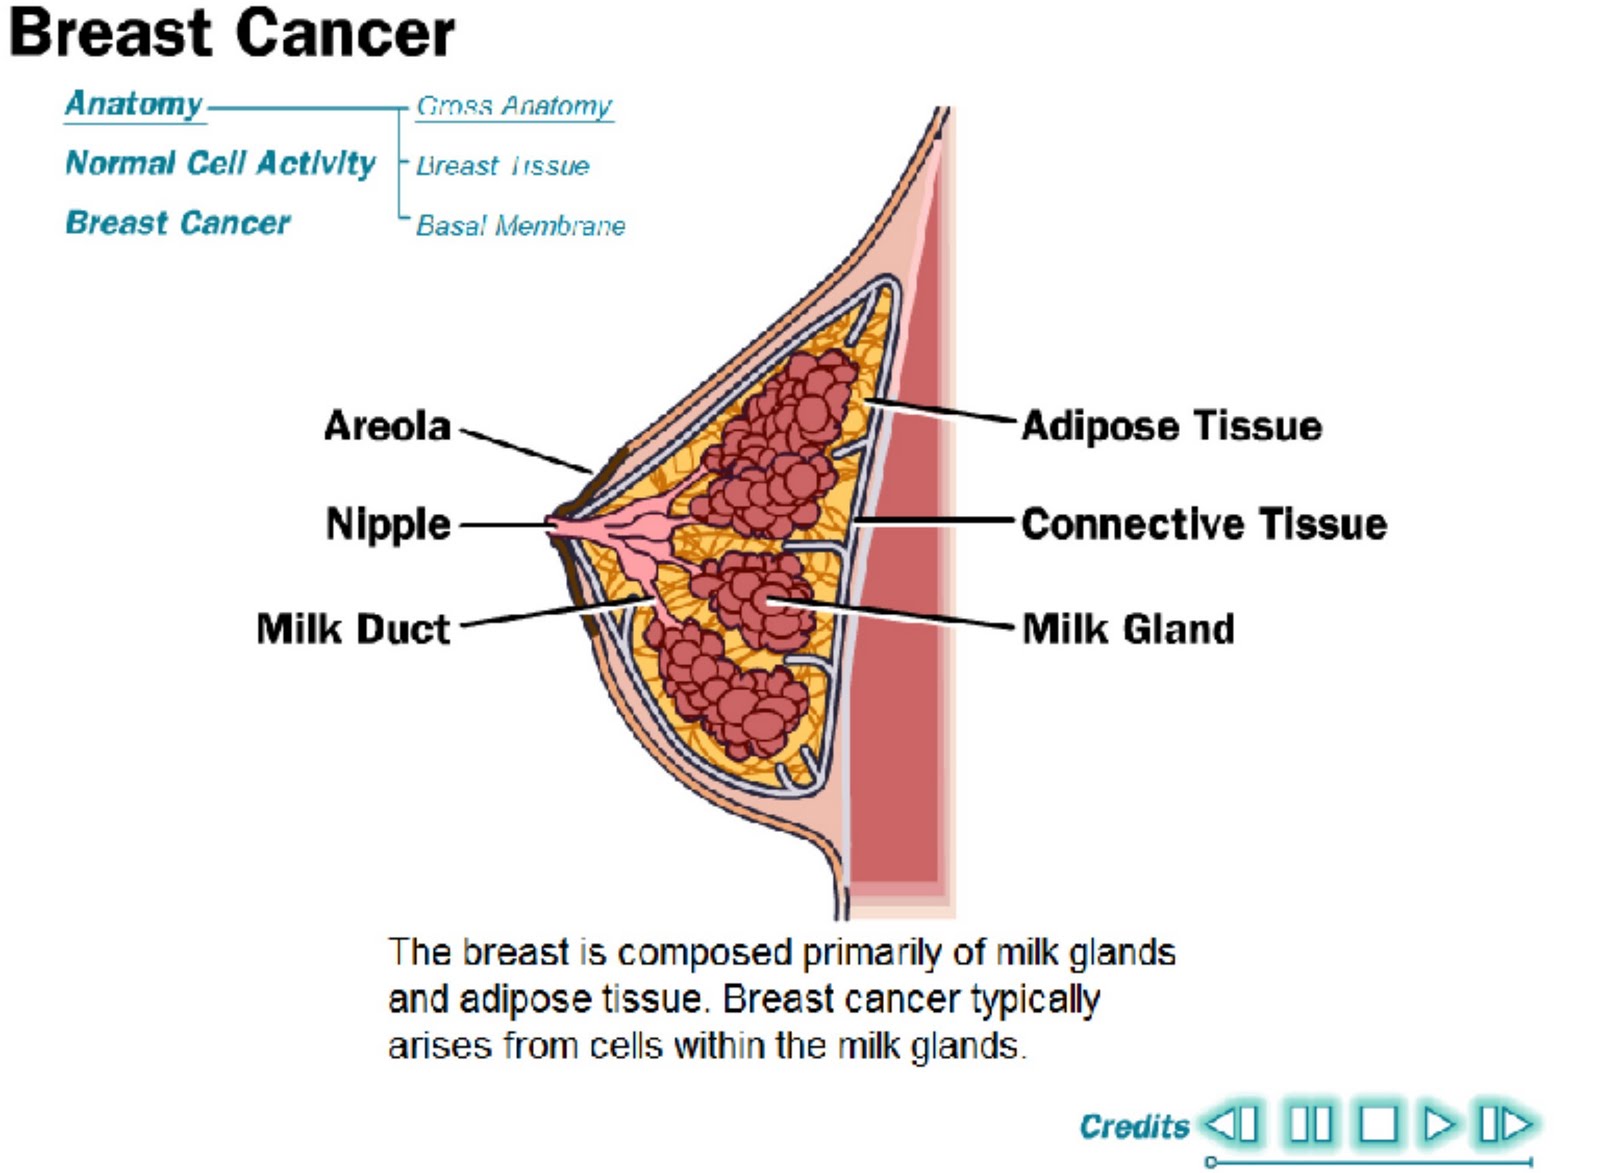 http://1.bp.blogspot.com/-PqllcLVbywg/TifDTj1UEhI/AAAAAAAAAGI/wcUv2t2rCzE/s1600/breastcancer.jpg